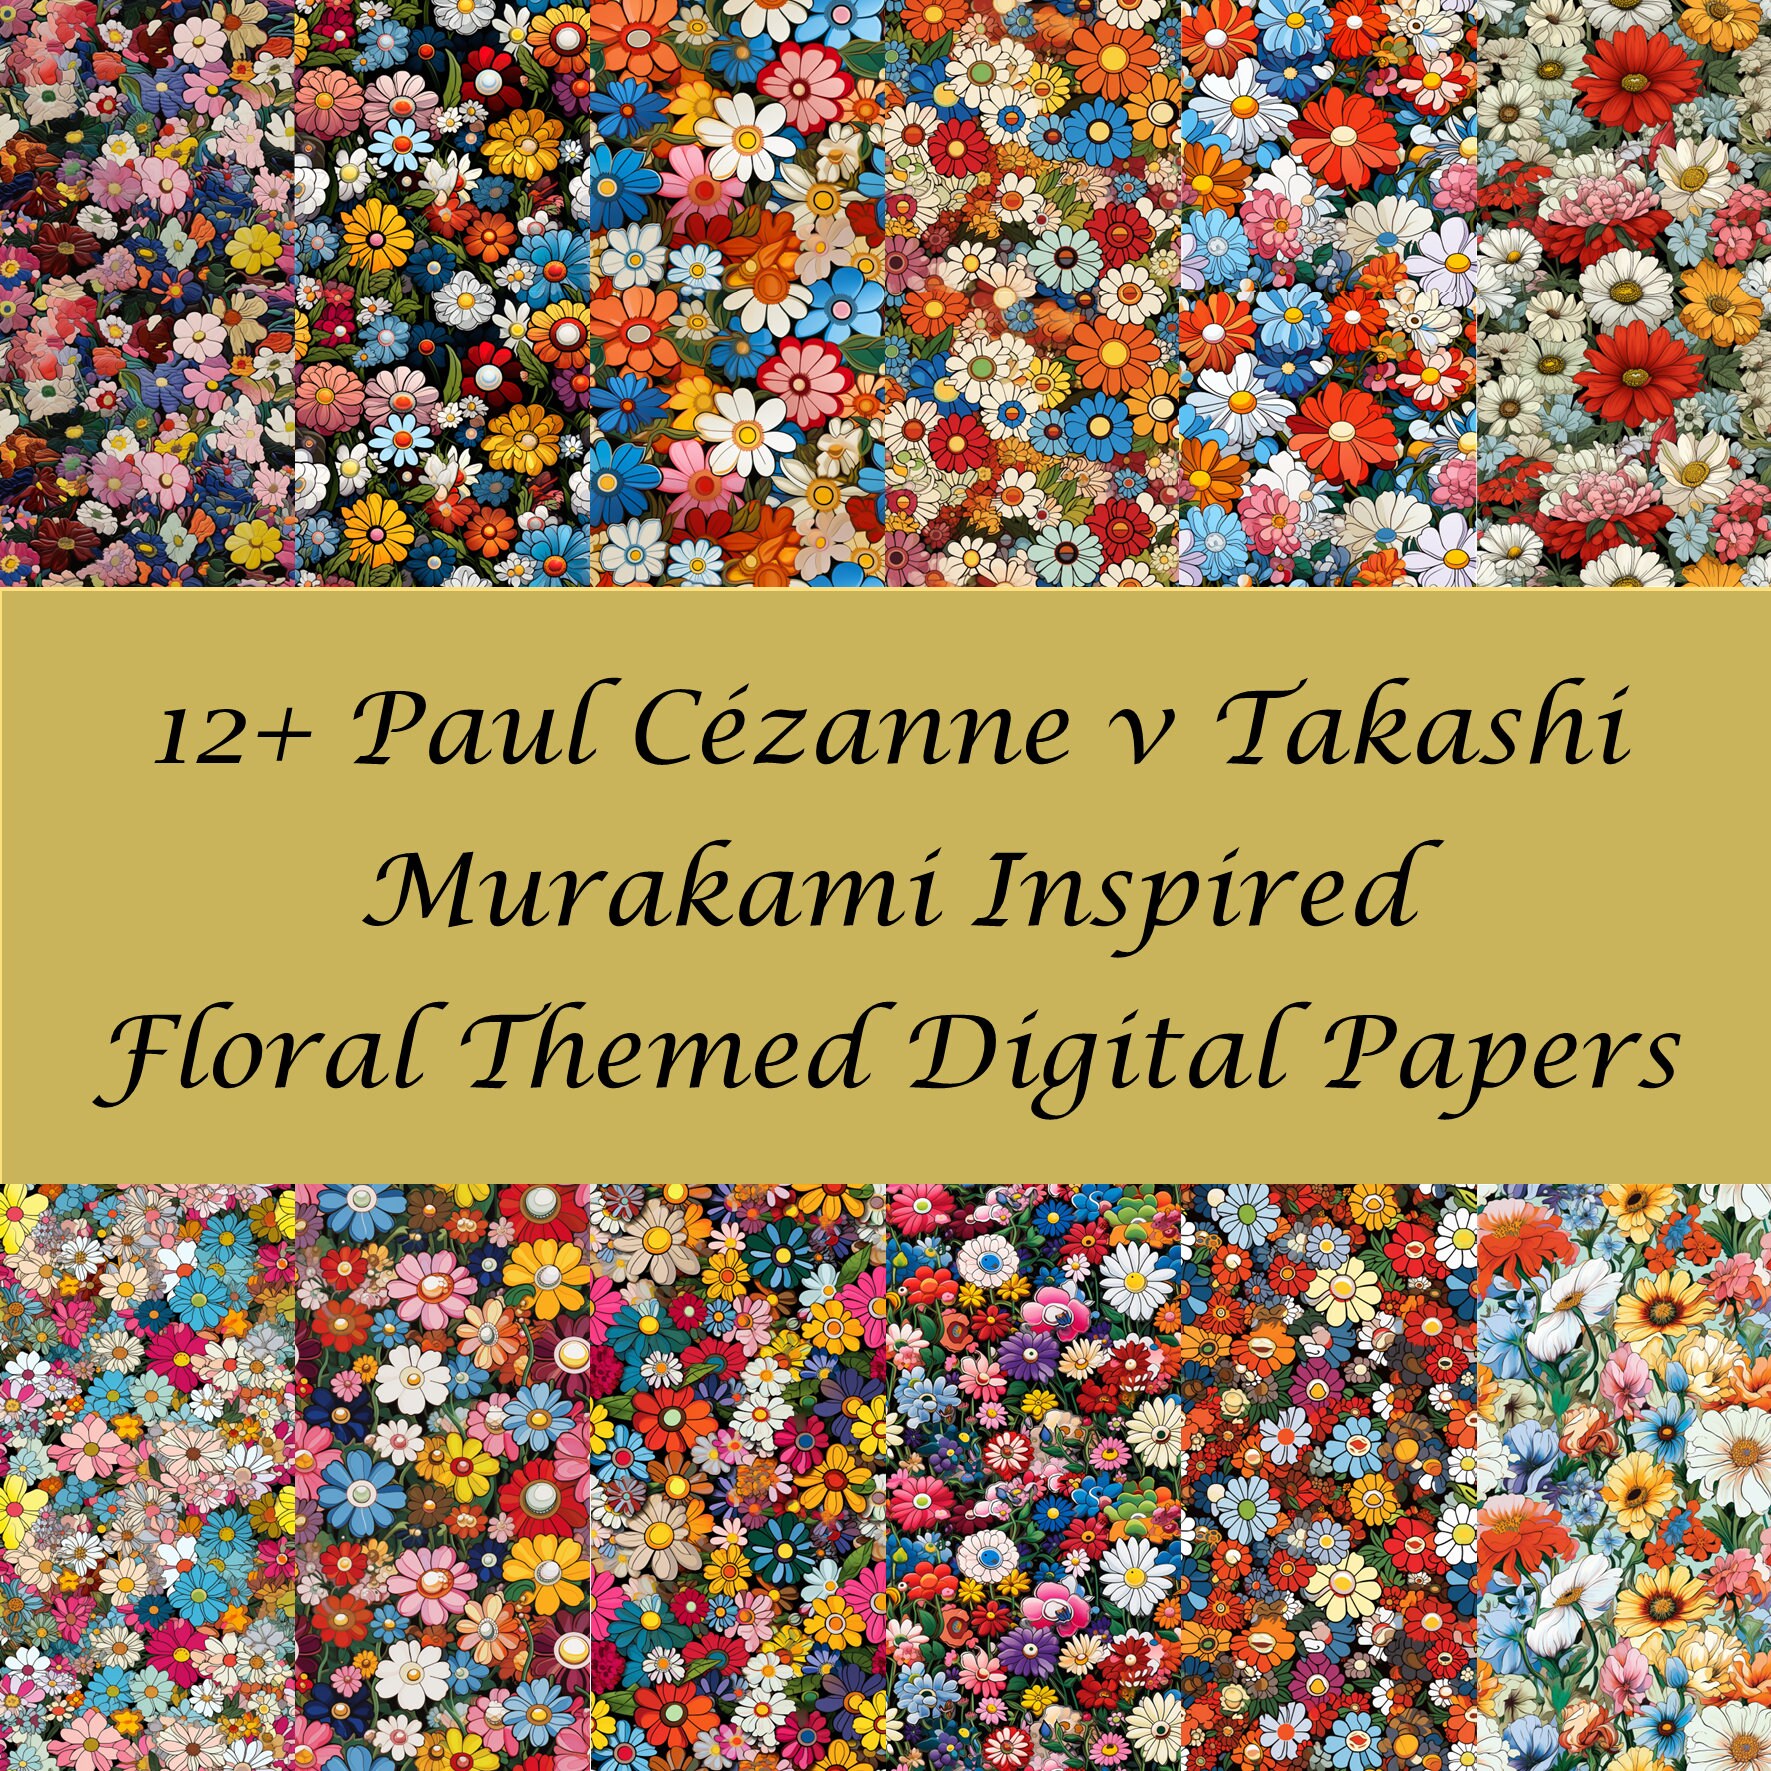 Post Malone & Takashi Murakami Collaborate on Vibrant Merchandise